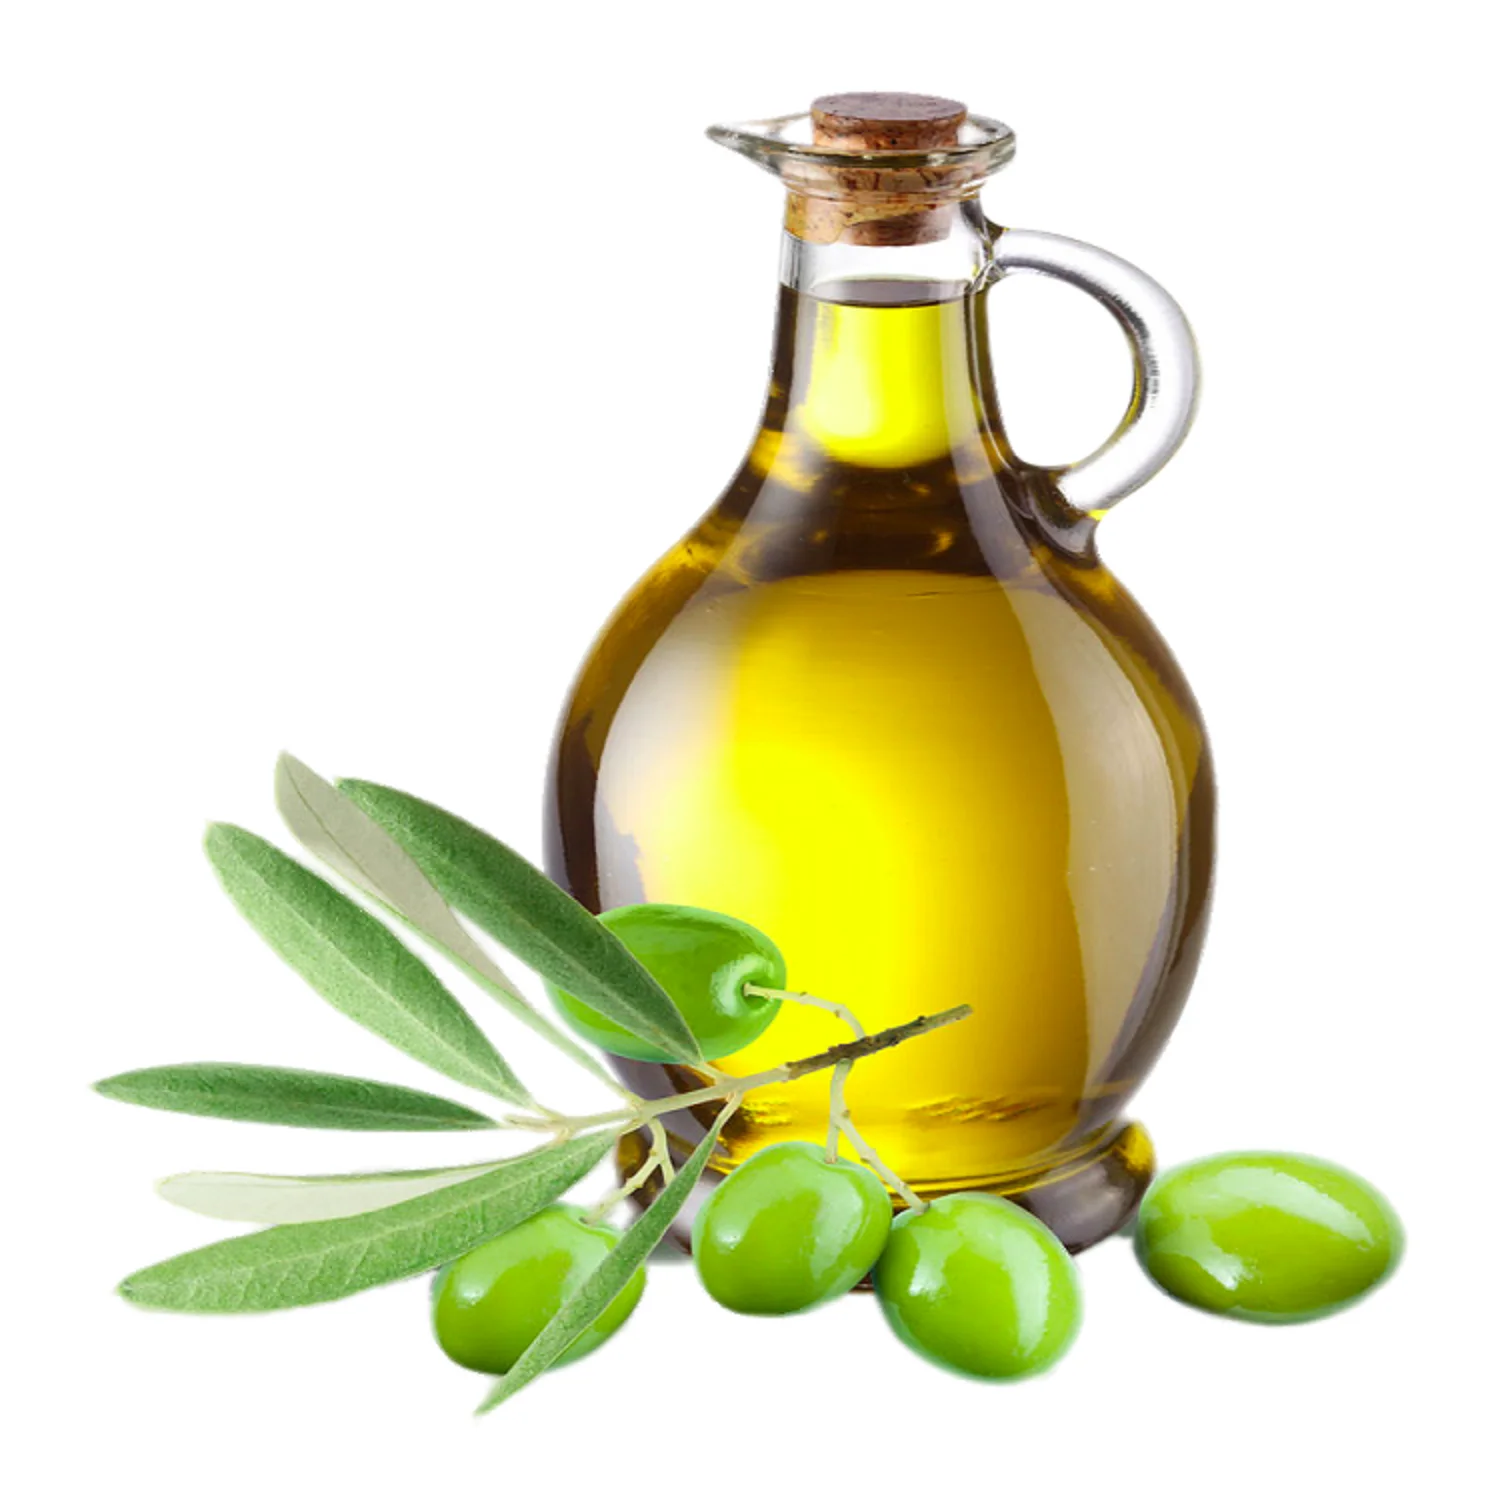 Olive Oil масло оливковое. Олив Ойл масло оливковое. Масло оливковое natural Olive Oil. Масло оливы, жожоба оливы. Вода и оливковое масло